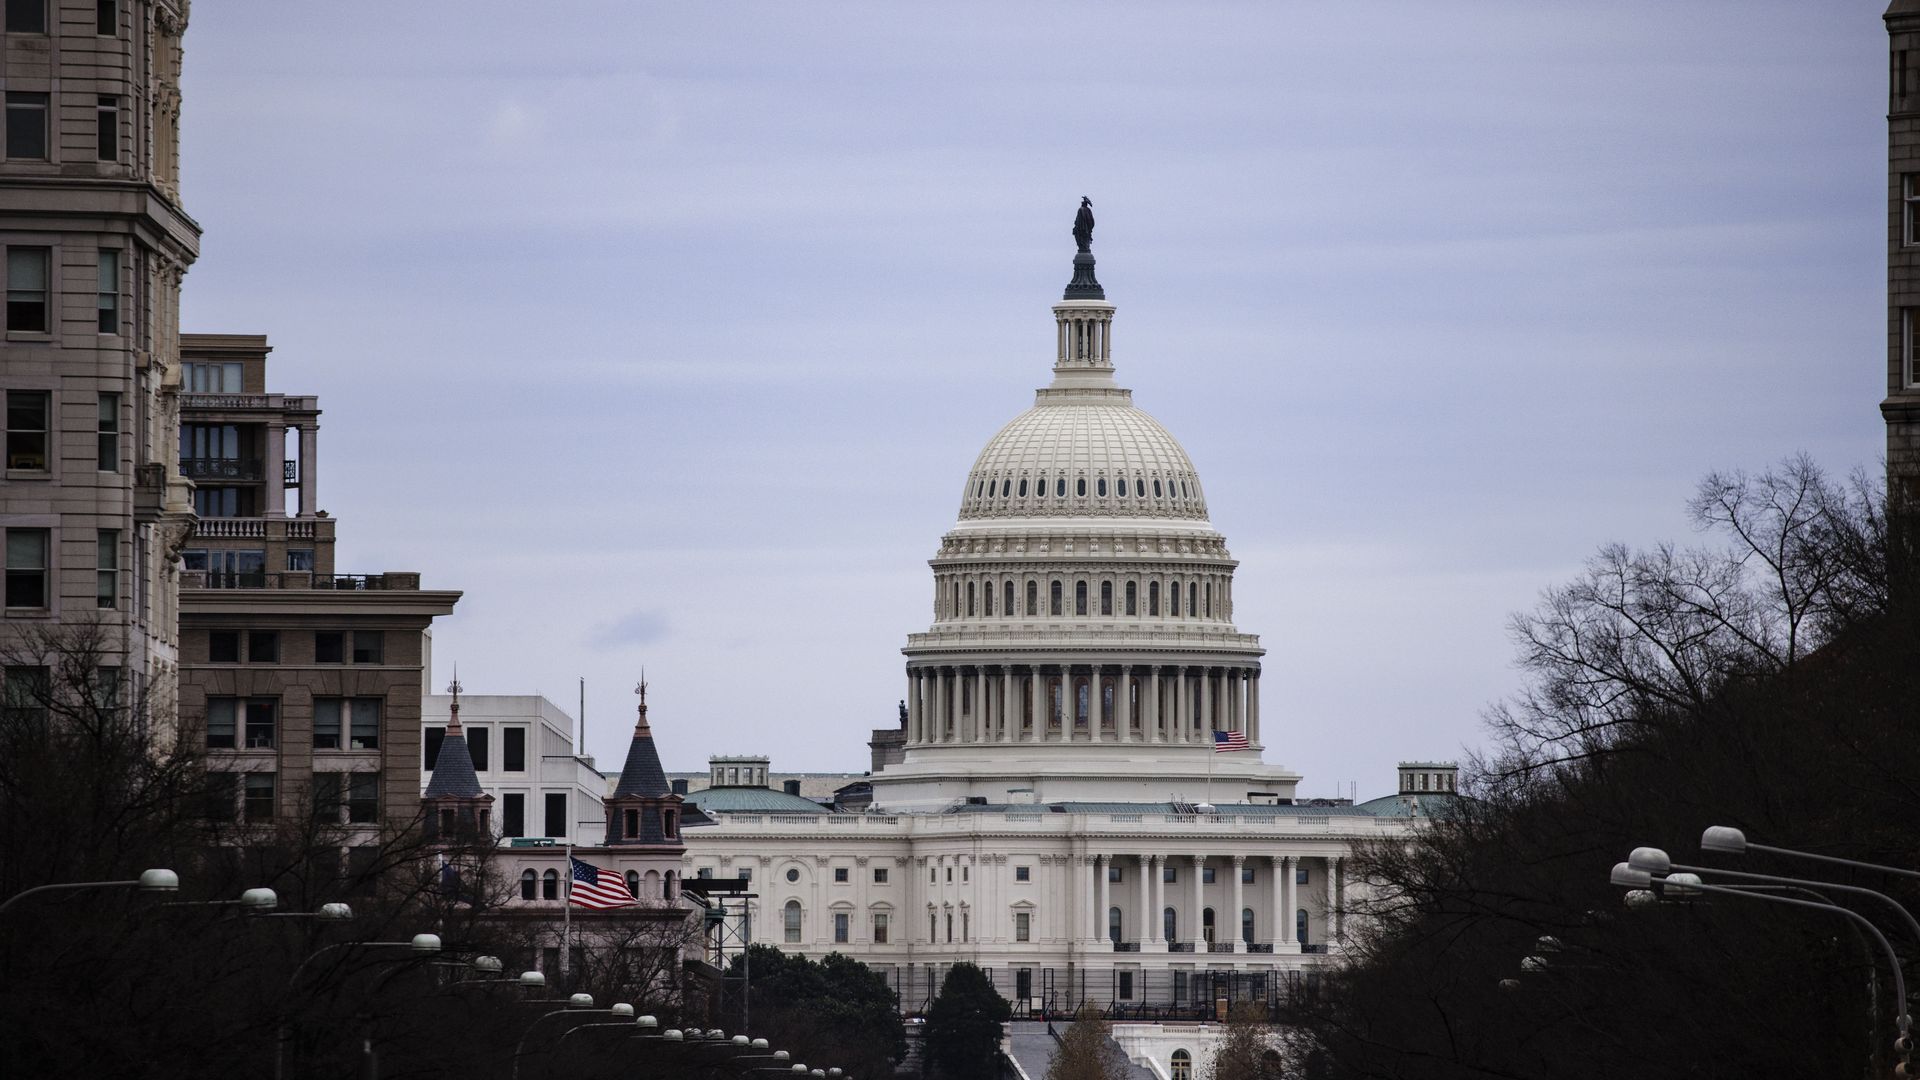 The U.S. Capitol building in Washington, D.C. Photo: Samuel Corum/Getty Images